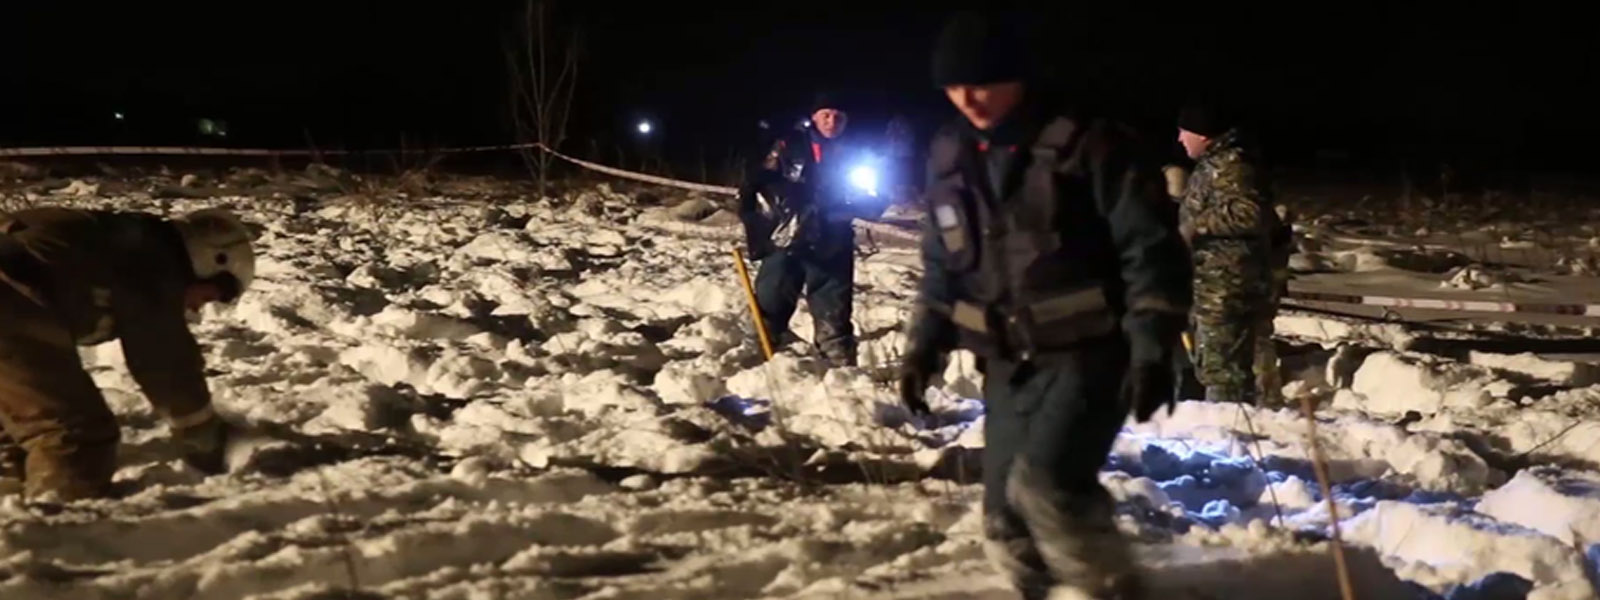 Russia investigators comb jet crash site